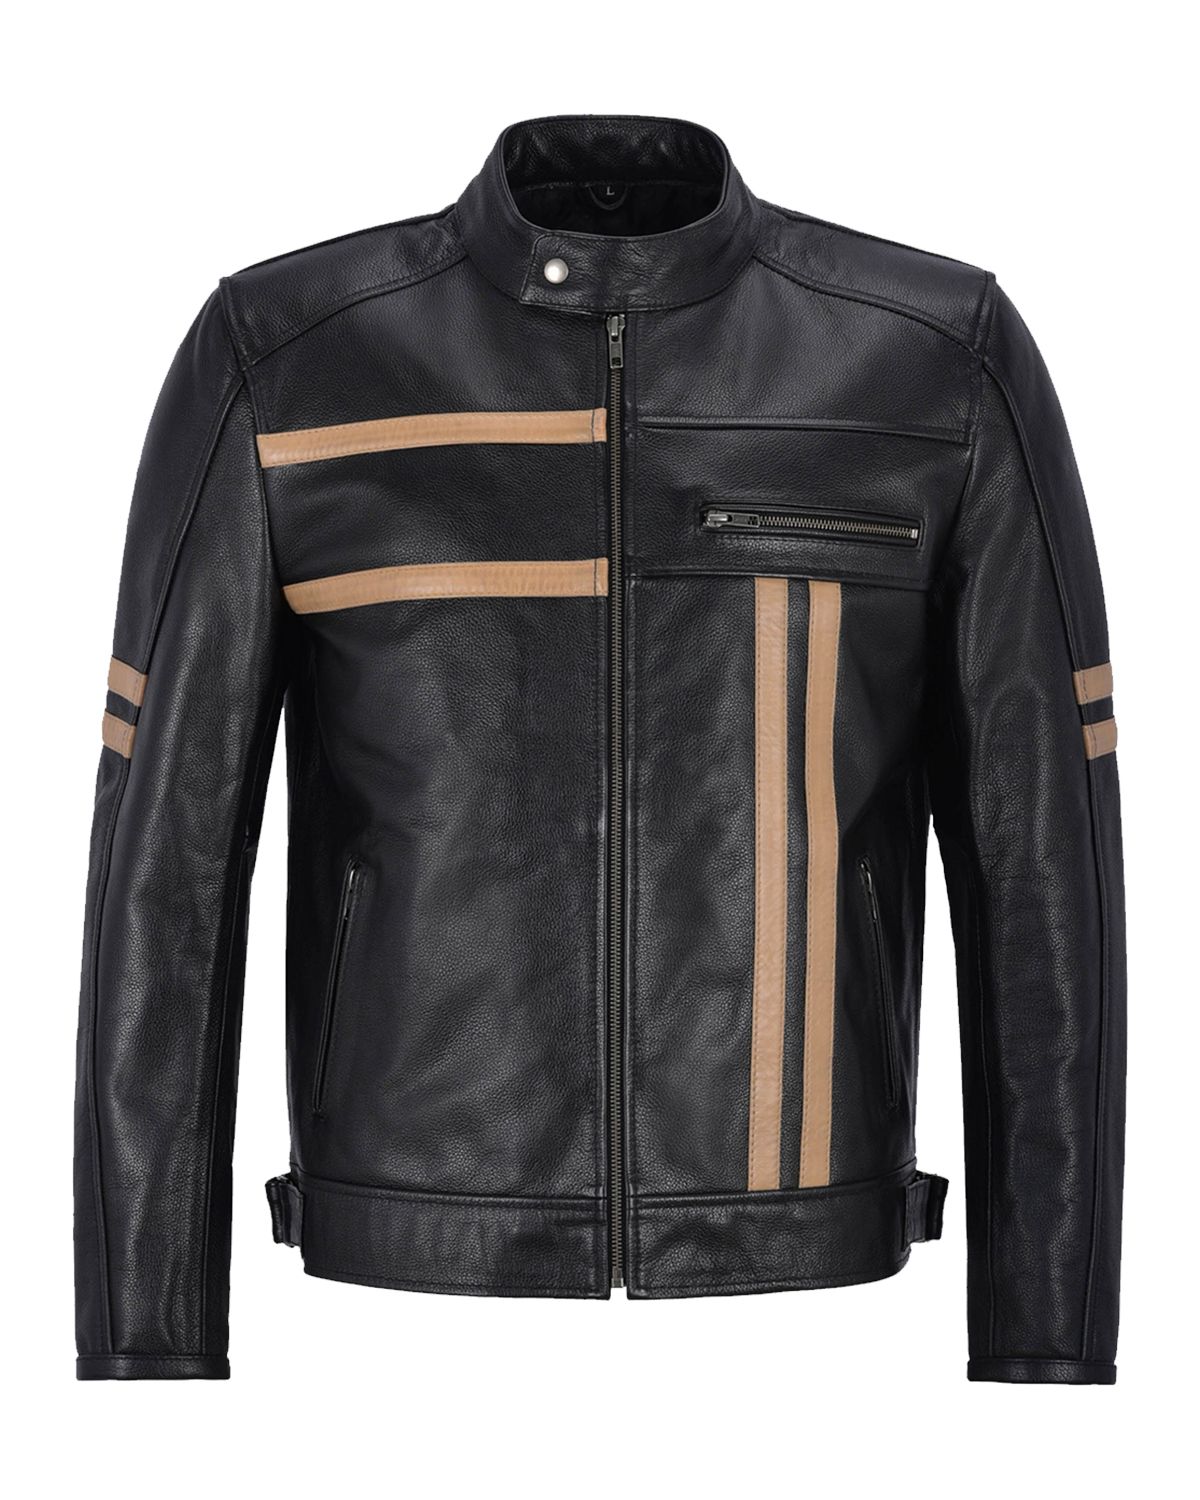 Mens VINTAGE Noise Pollution AC DC Cut Off Sleeves Biker Leather Jacket Sz L